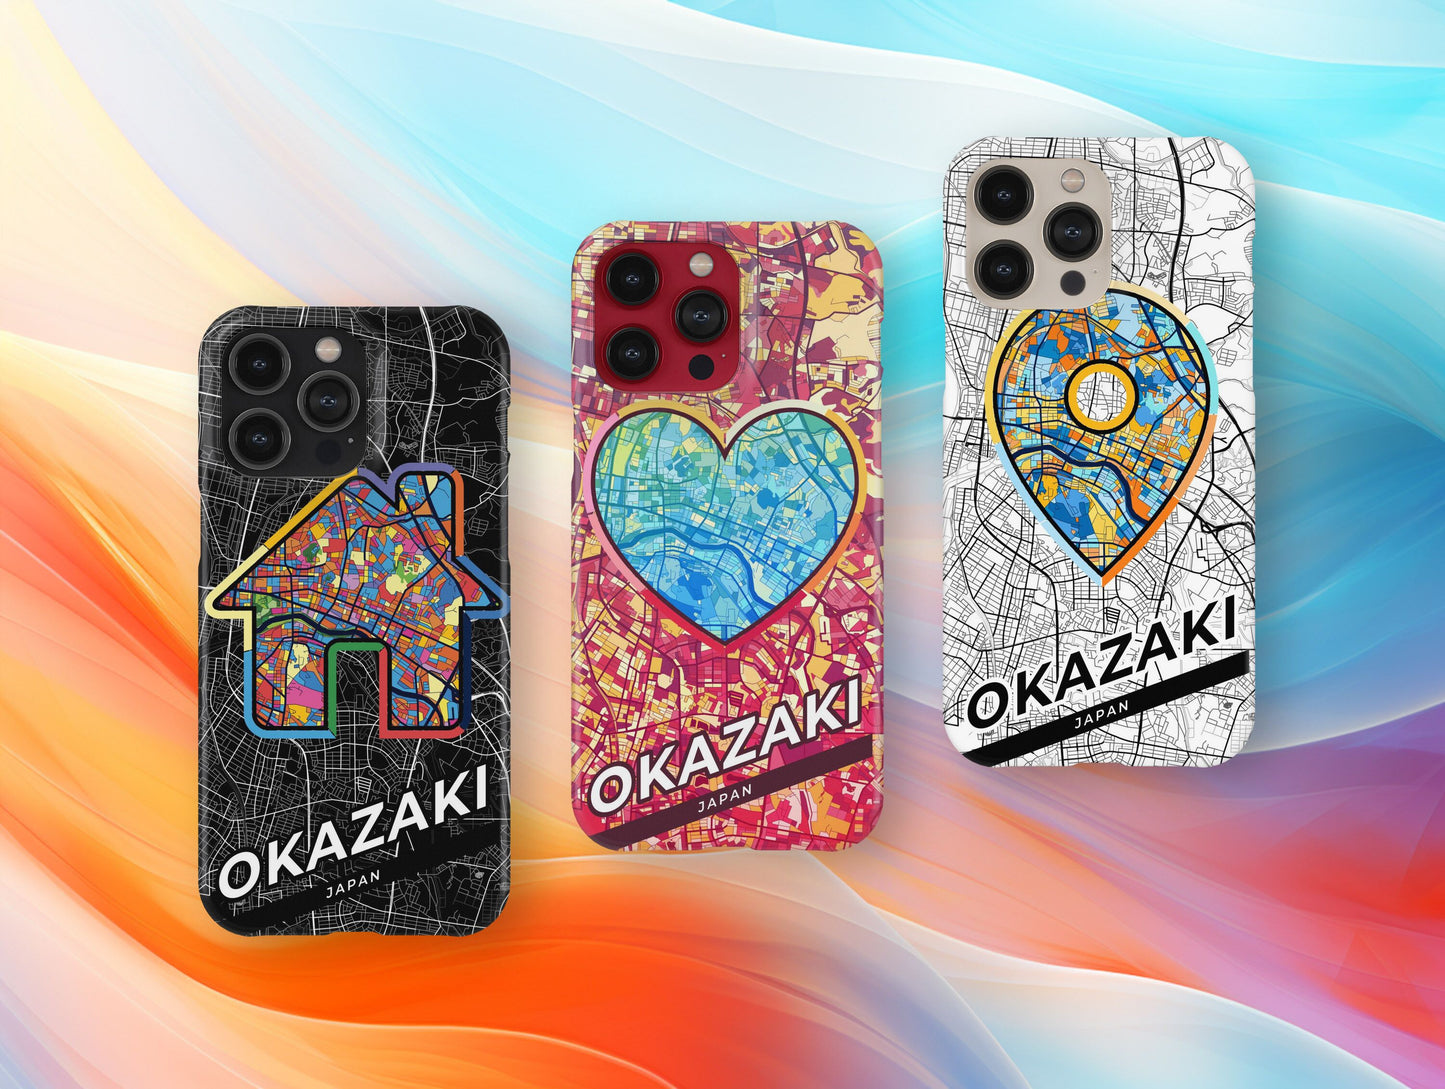 Okazaki Japan slim phone case with colorful icon